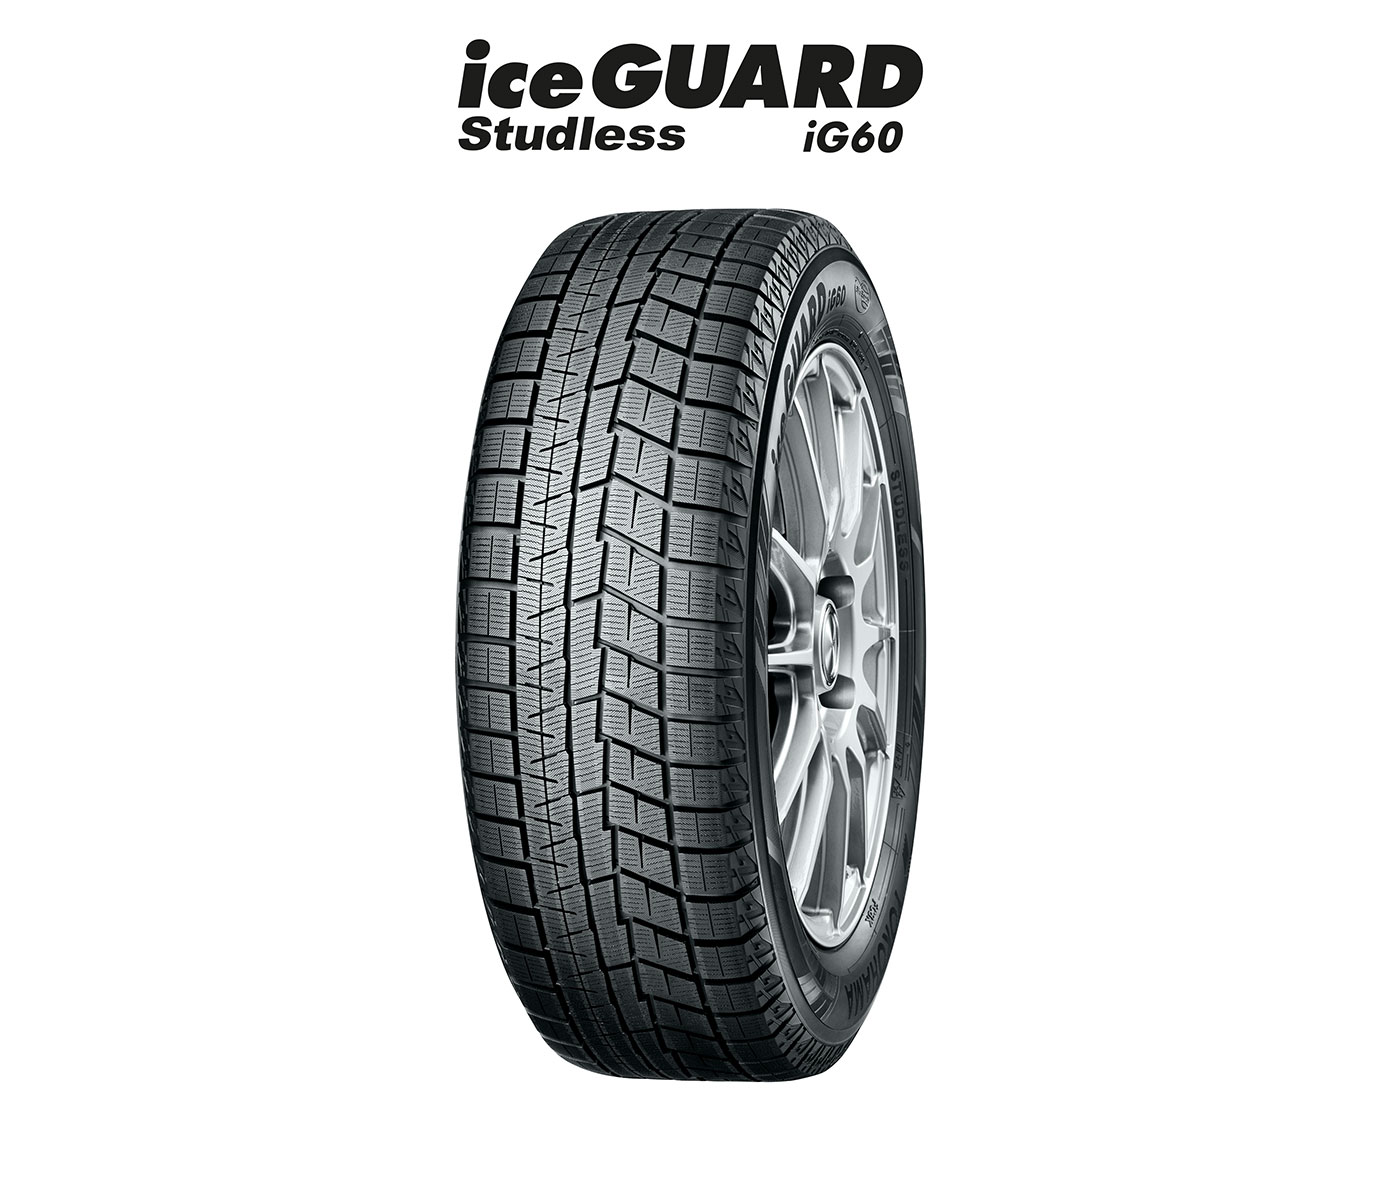 iceGUARD studless iG60